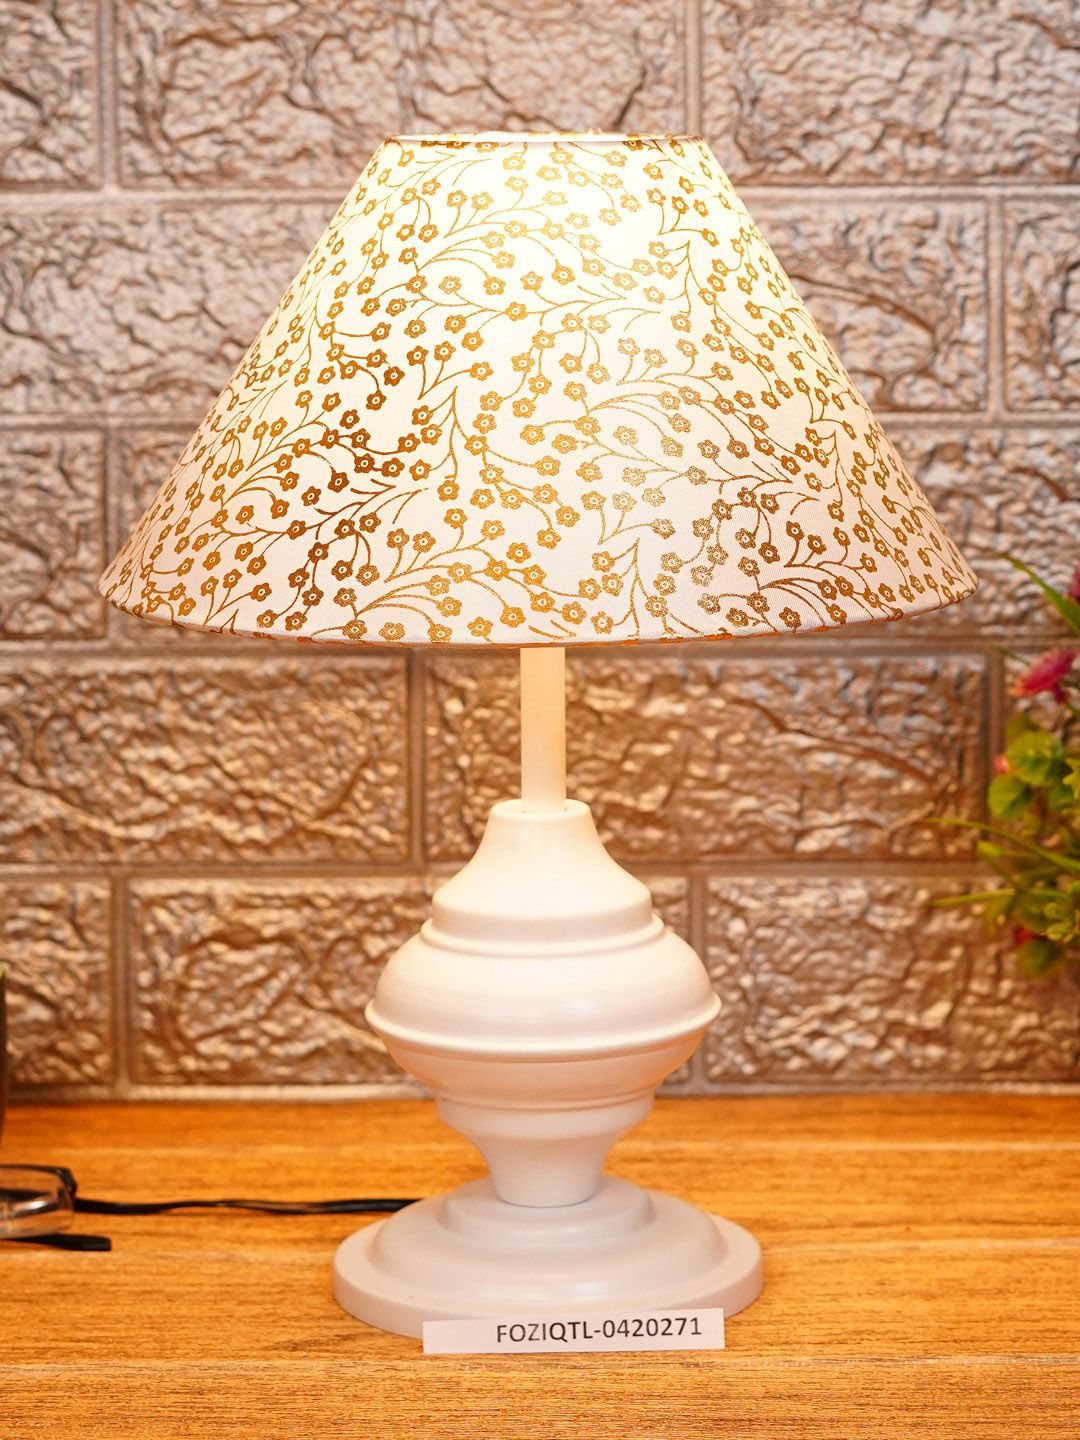 foziq White Printed Table Lamps Price in India